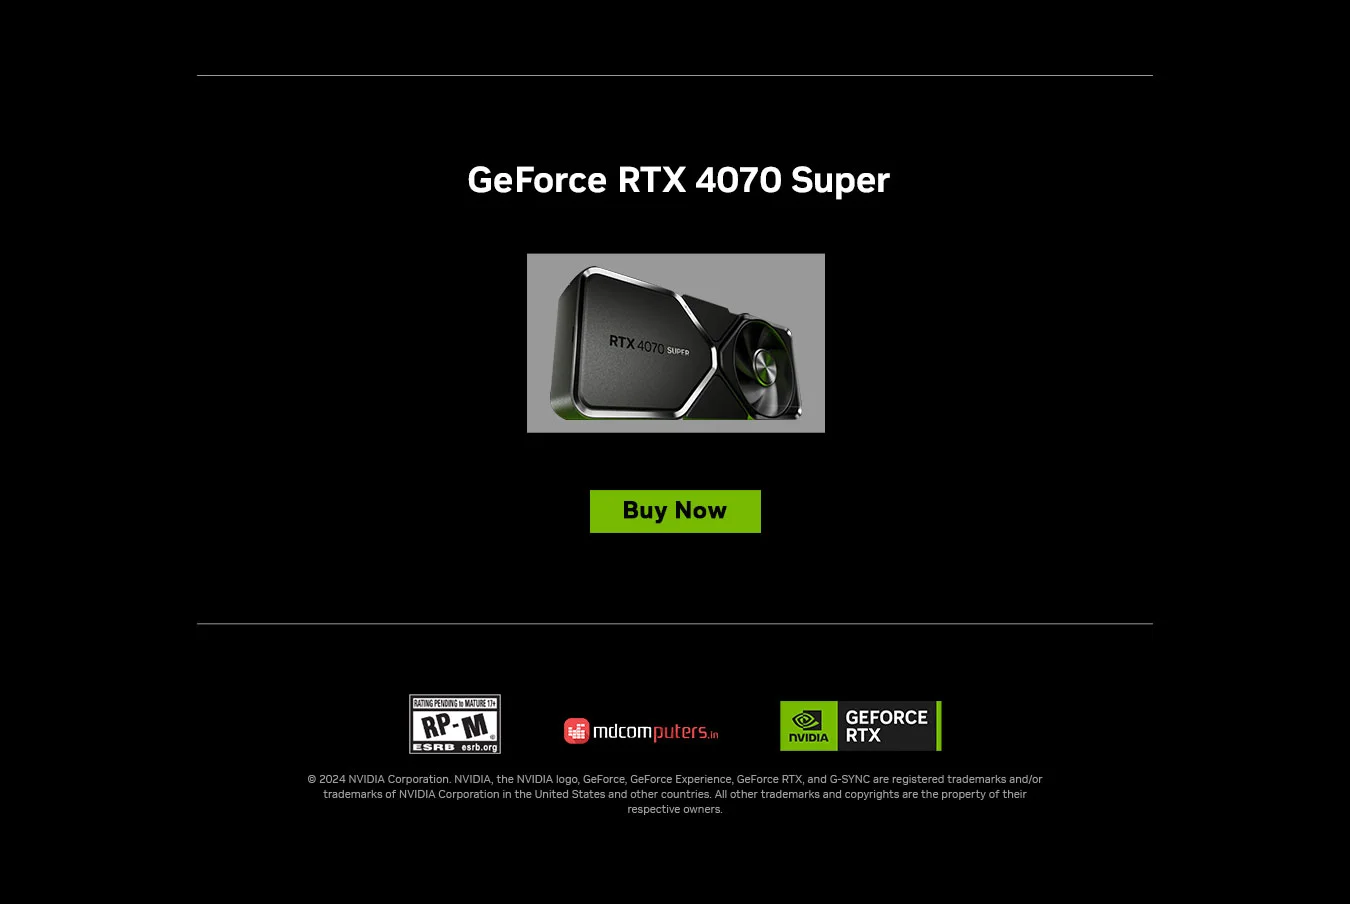 Geforce RTX 4070 Super Series GPU